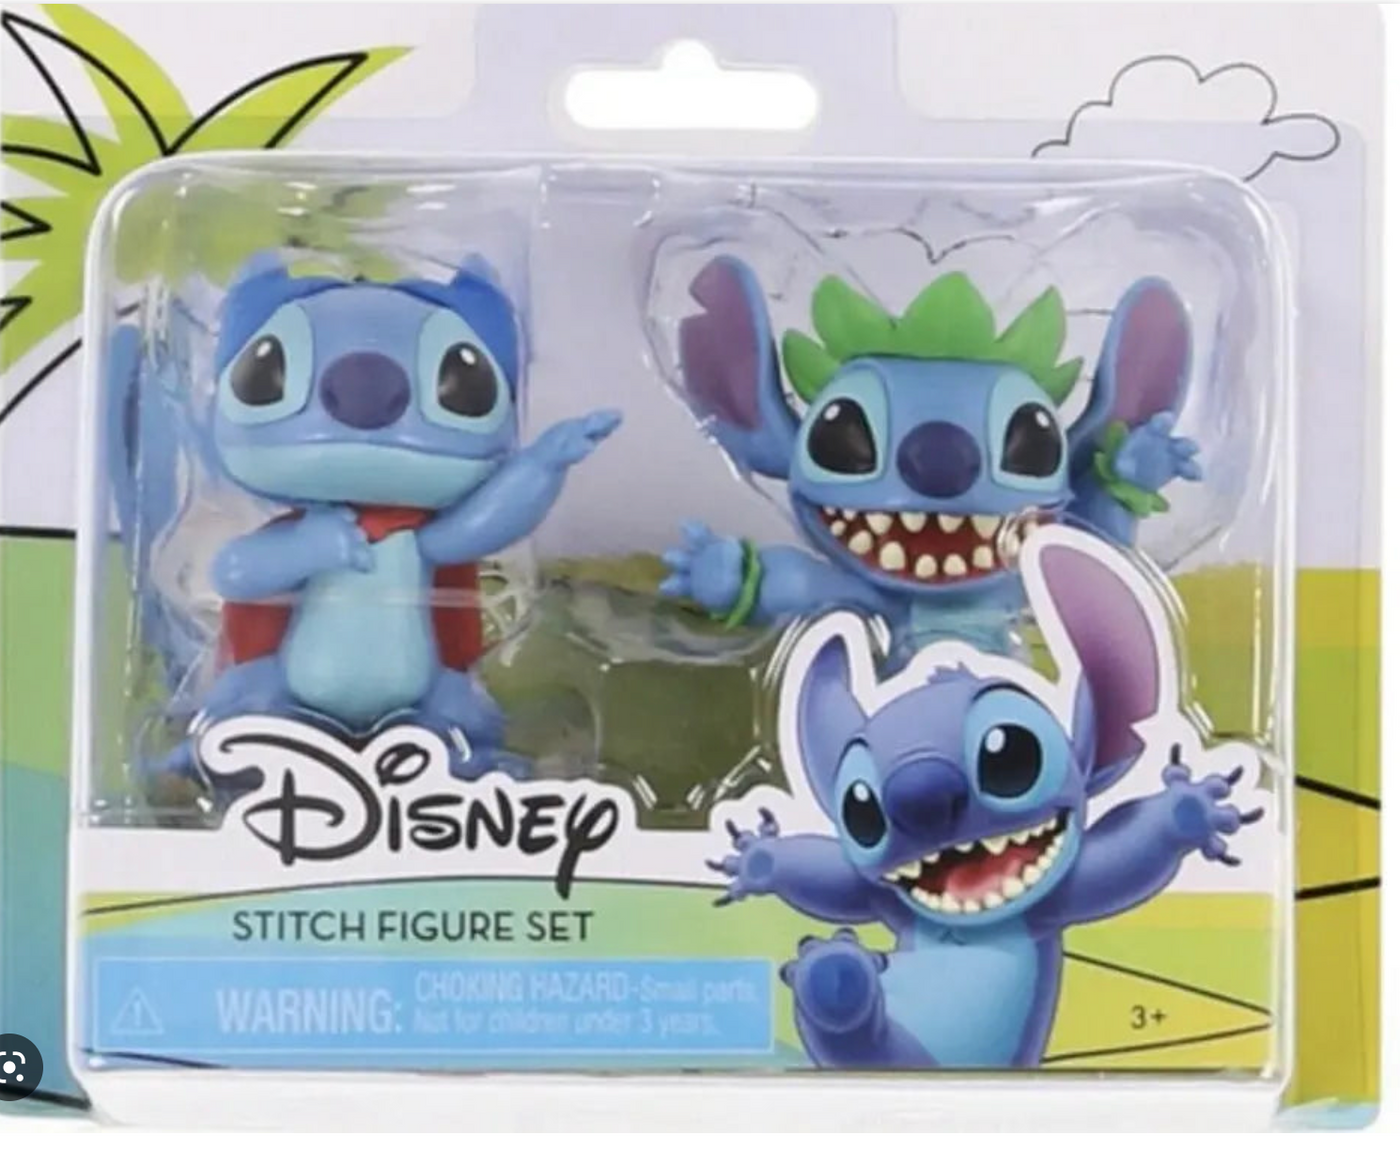 Disney LILO & Stitch Figure Set 3" Superhero and Hula Stitch Figure Set New With Box